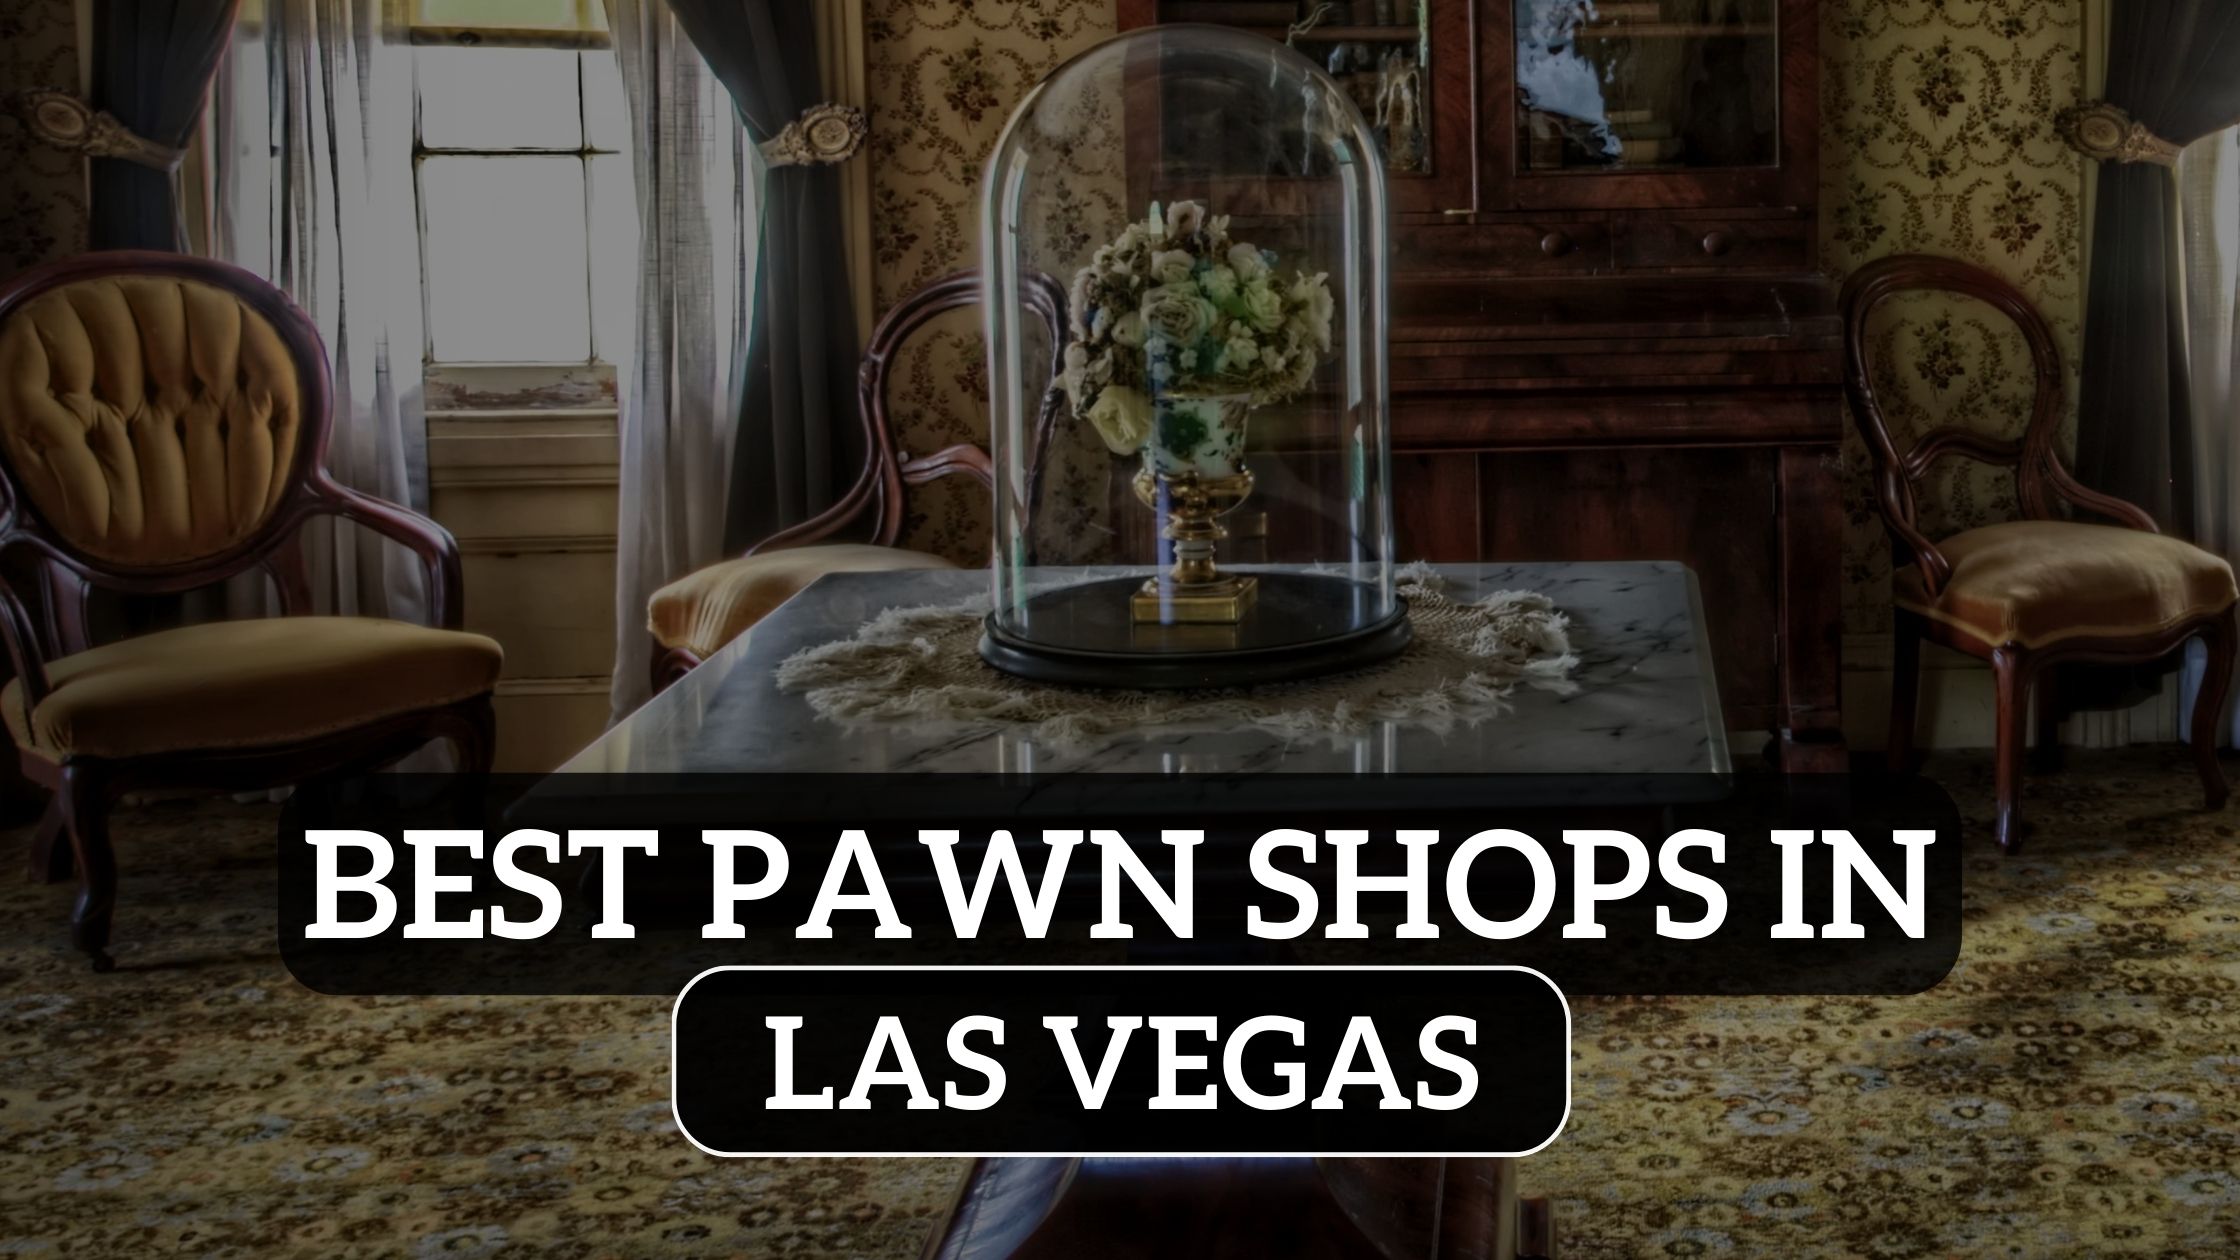 Las Vegas Has The Best Pawn Shops❗️ DM Me Any Questions